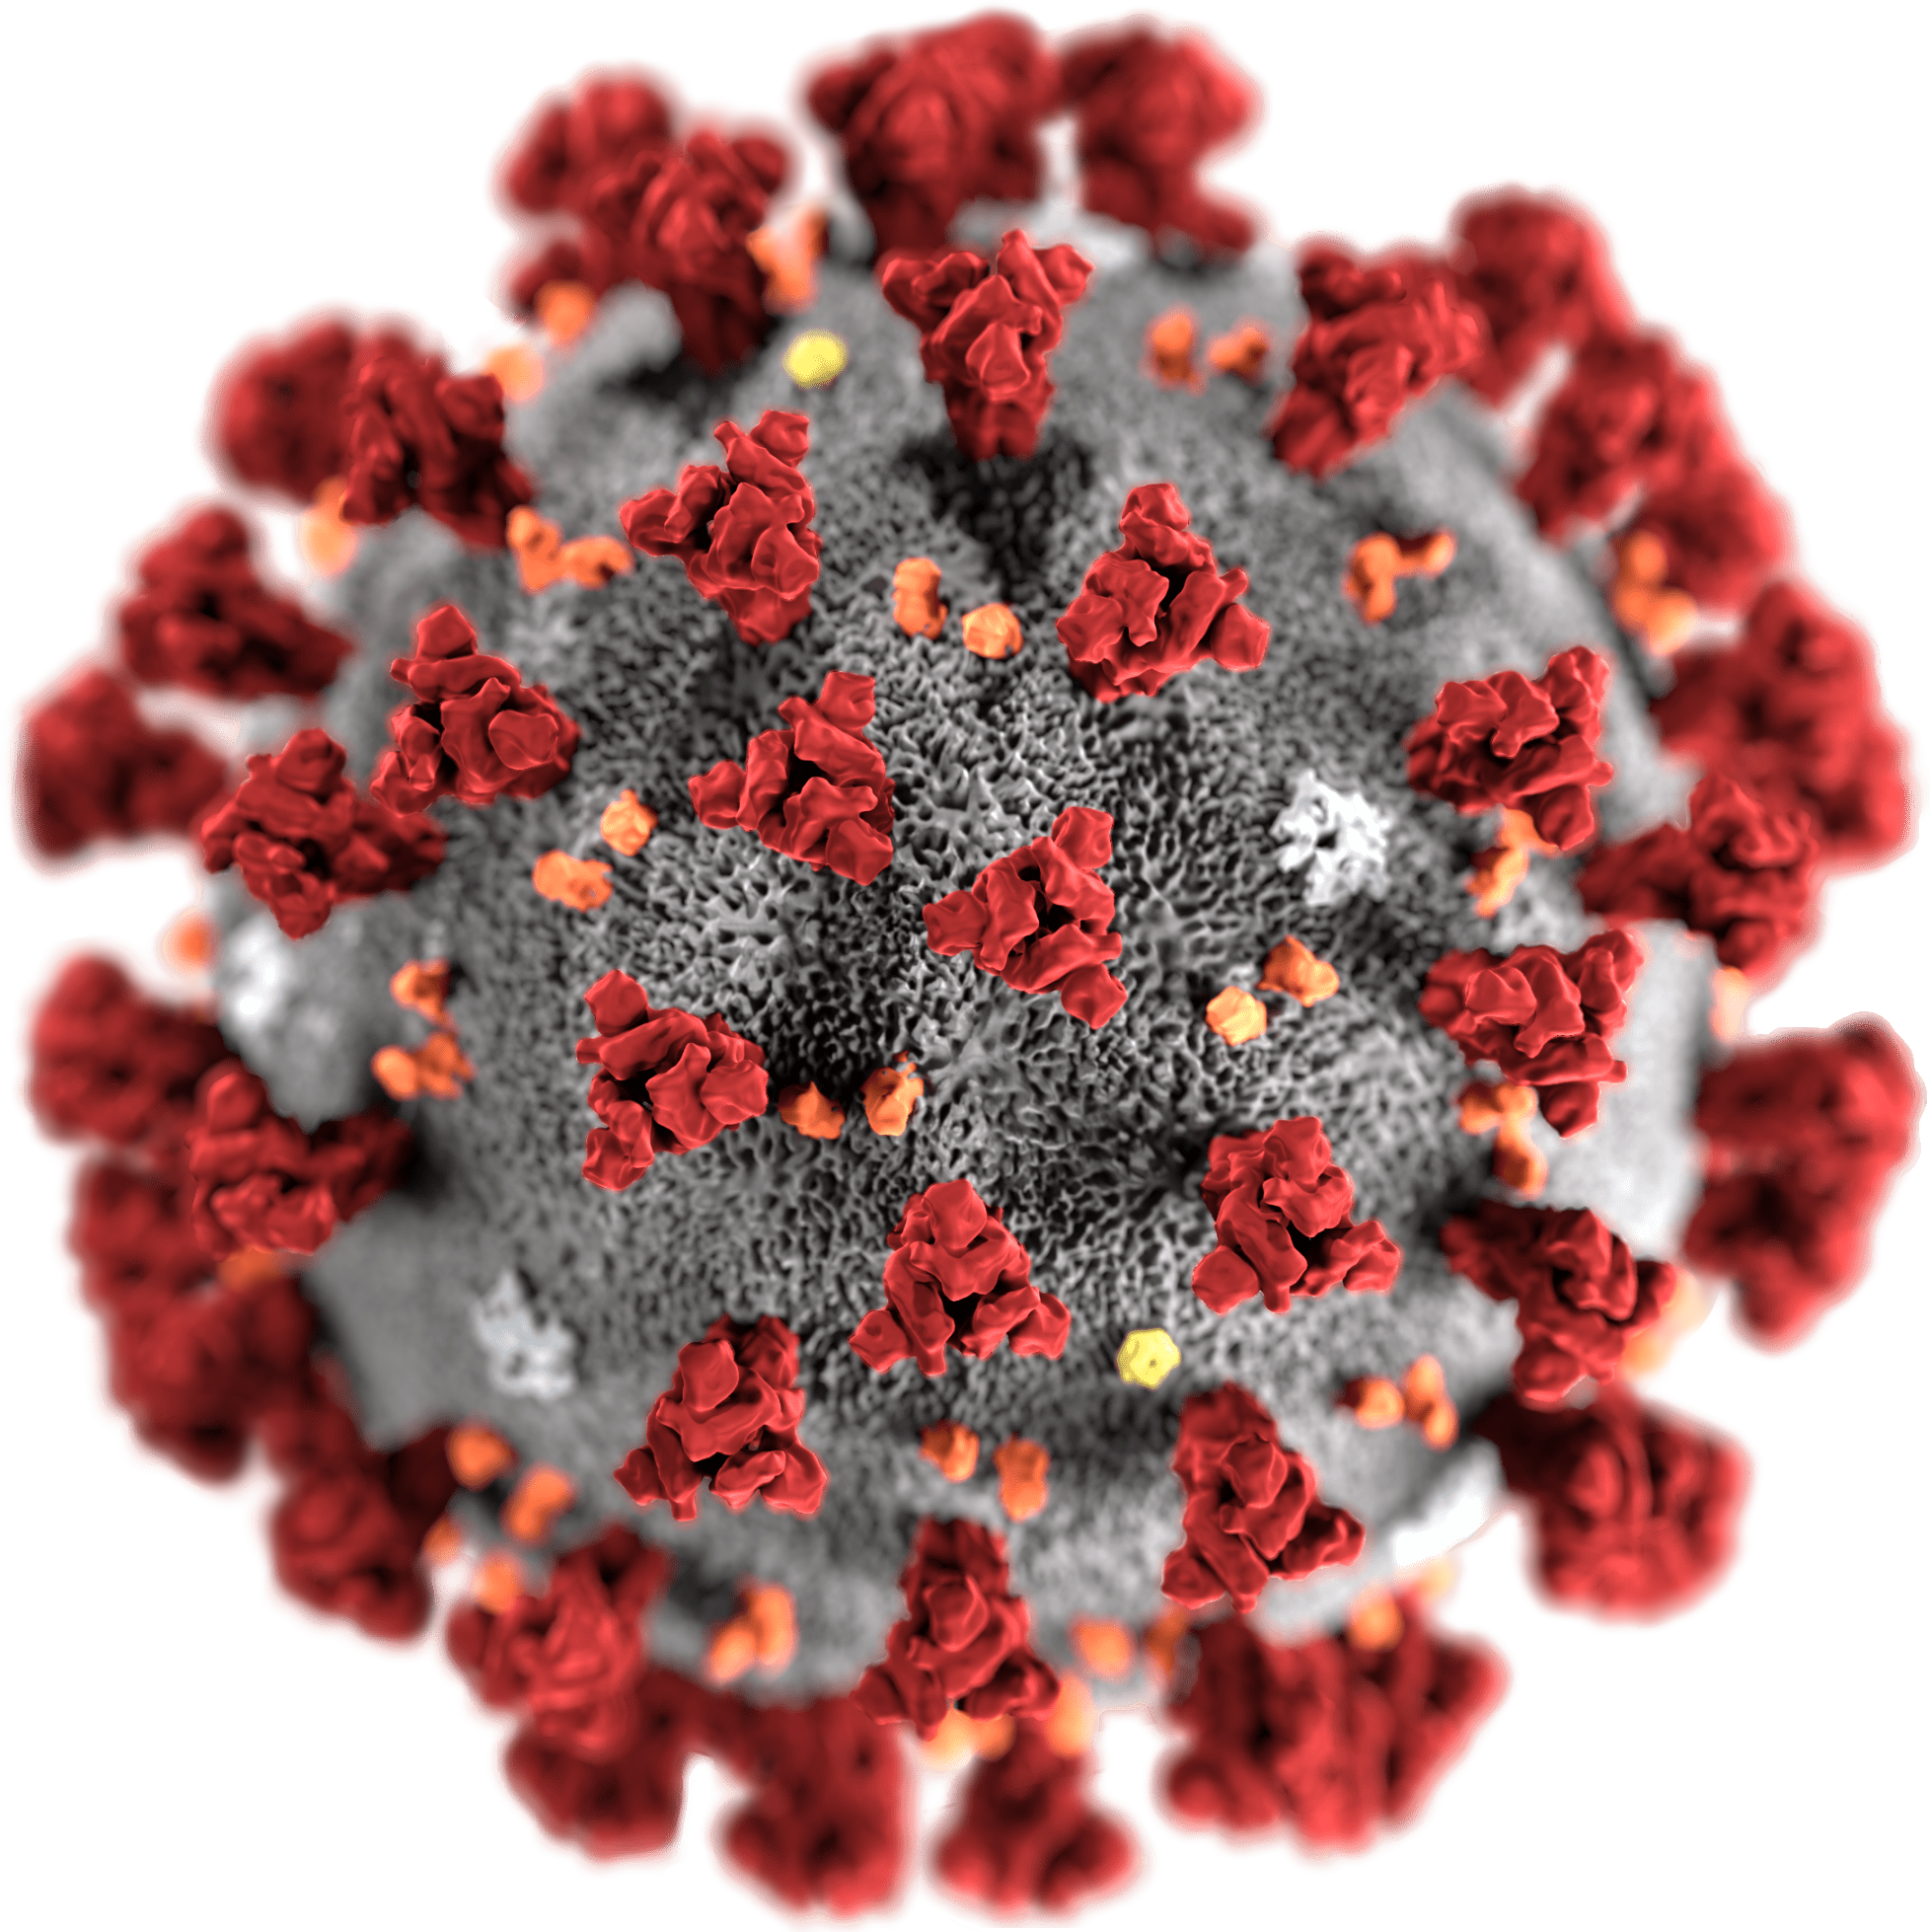 illustration showing the morphology of coronaviruses